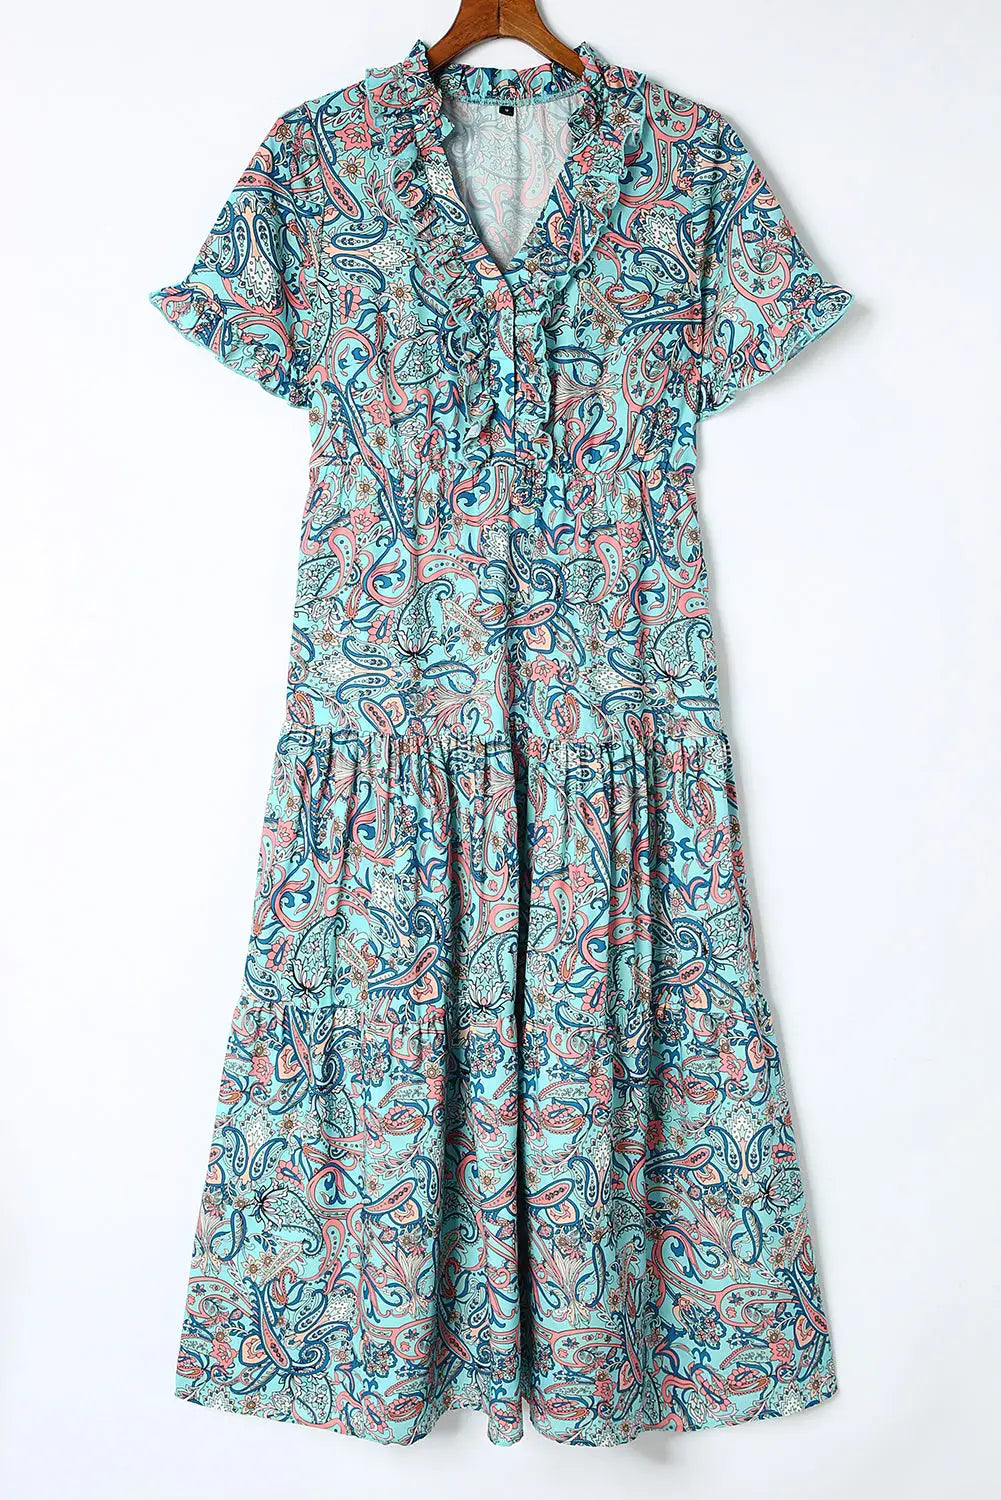 Sky blue paisley print boho holiday ruffle tiered maxi dress - dresses